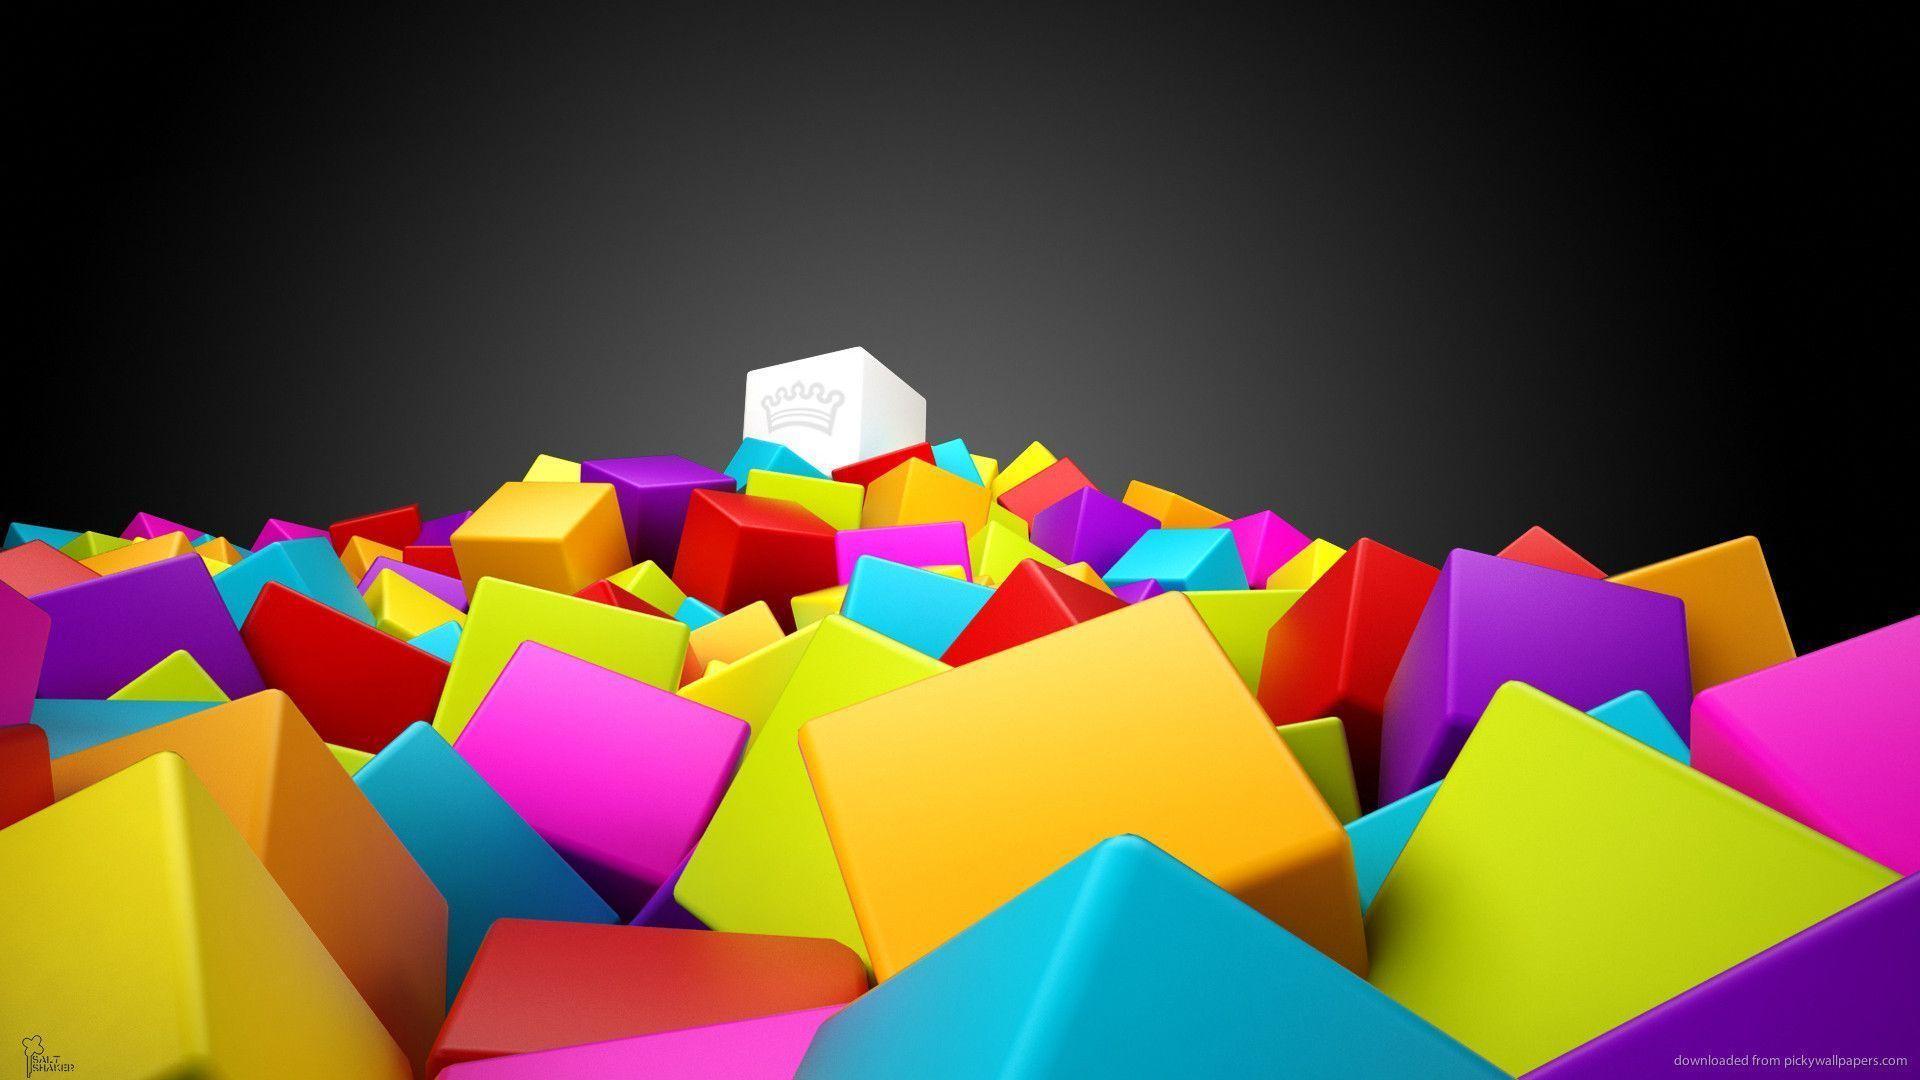 Download 1920x1080 Cool 3D Colorful Cubes Wallpaper